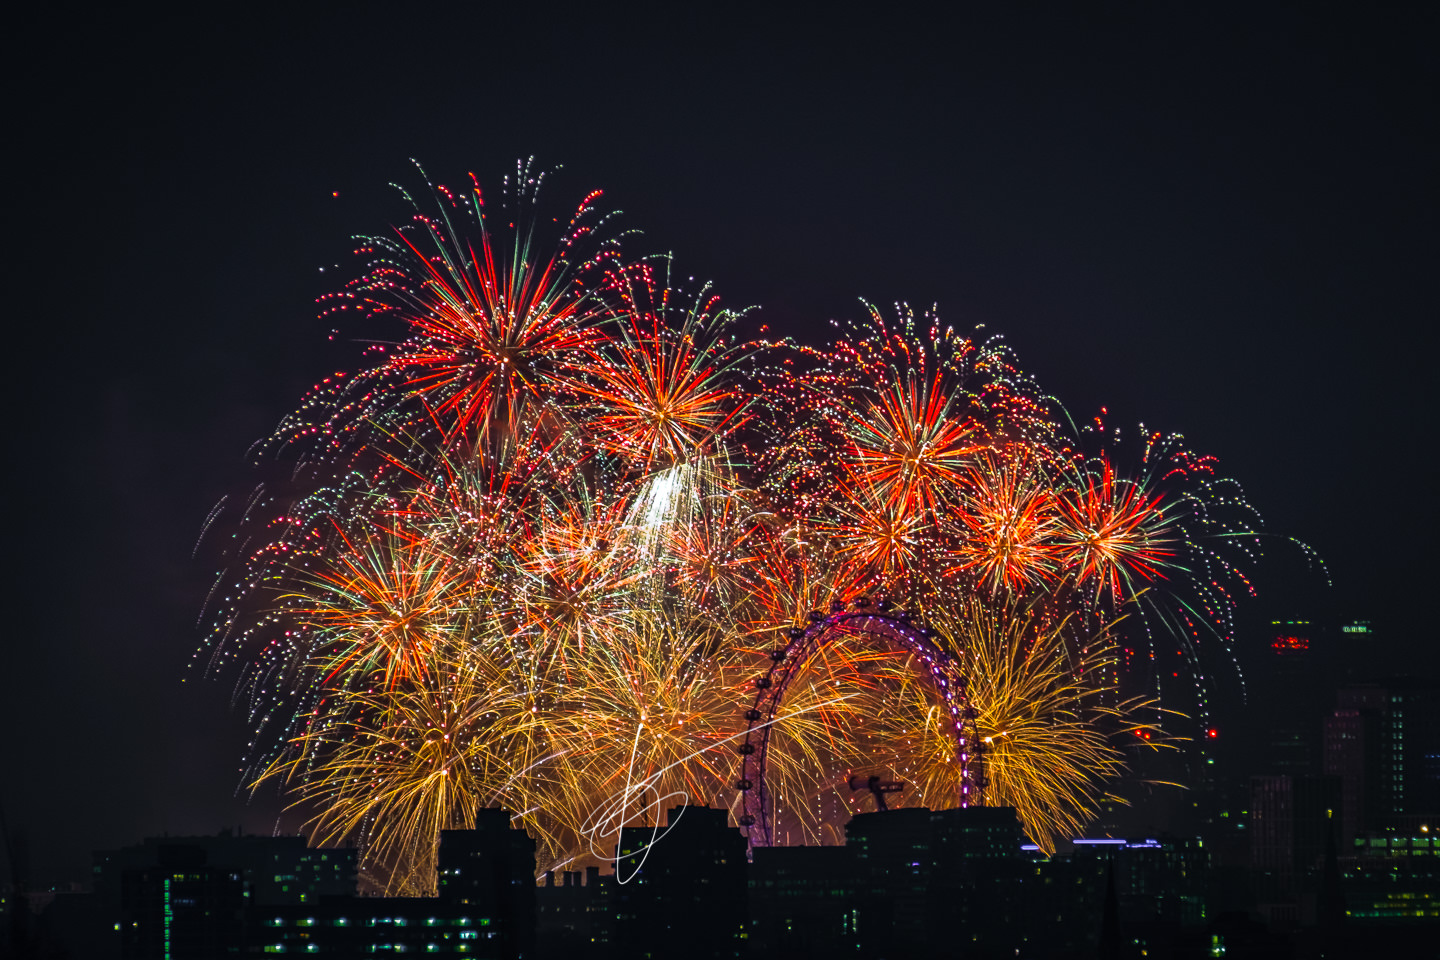 London New Year fireworks